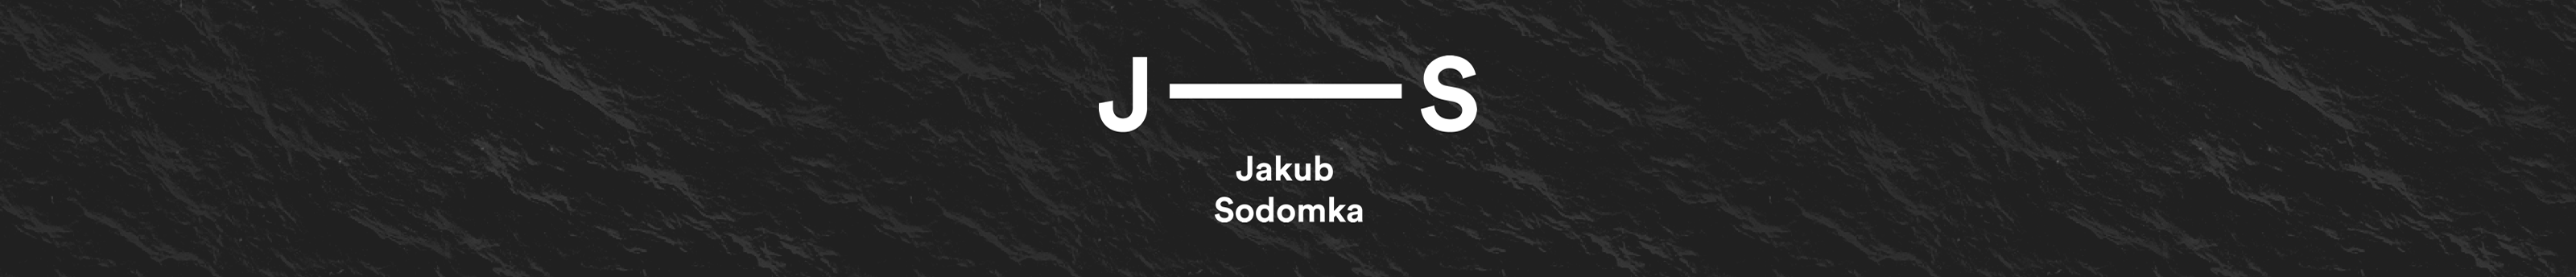 Jakub Sodomka's profile banner